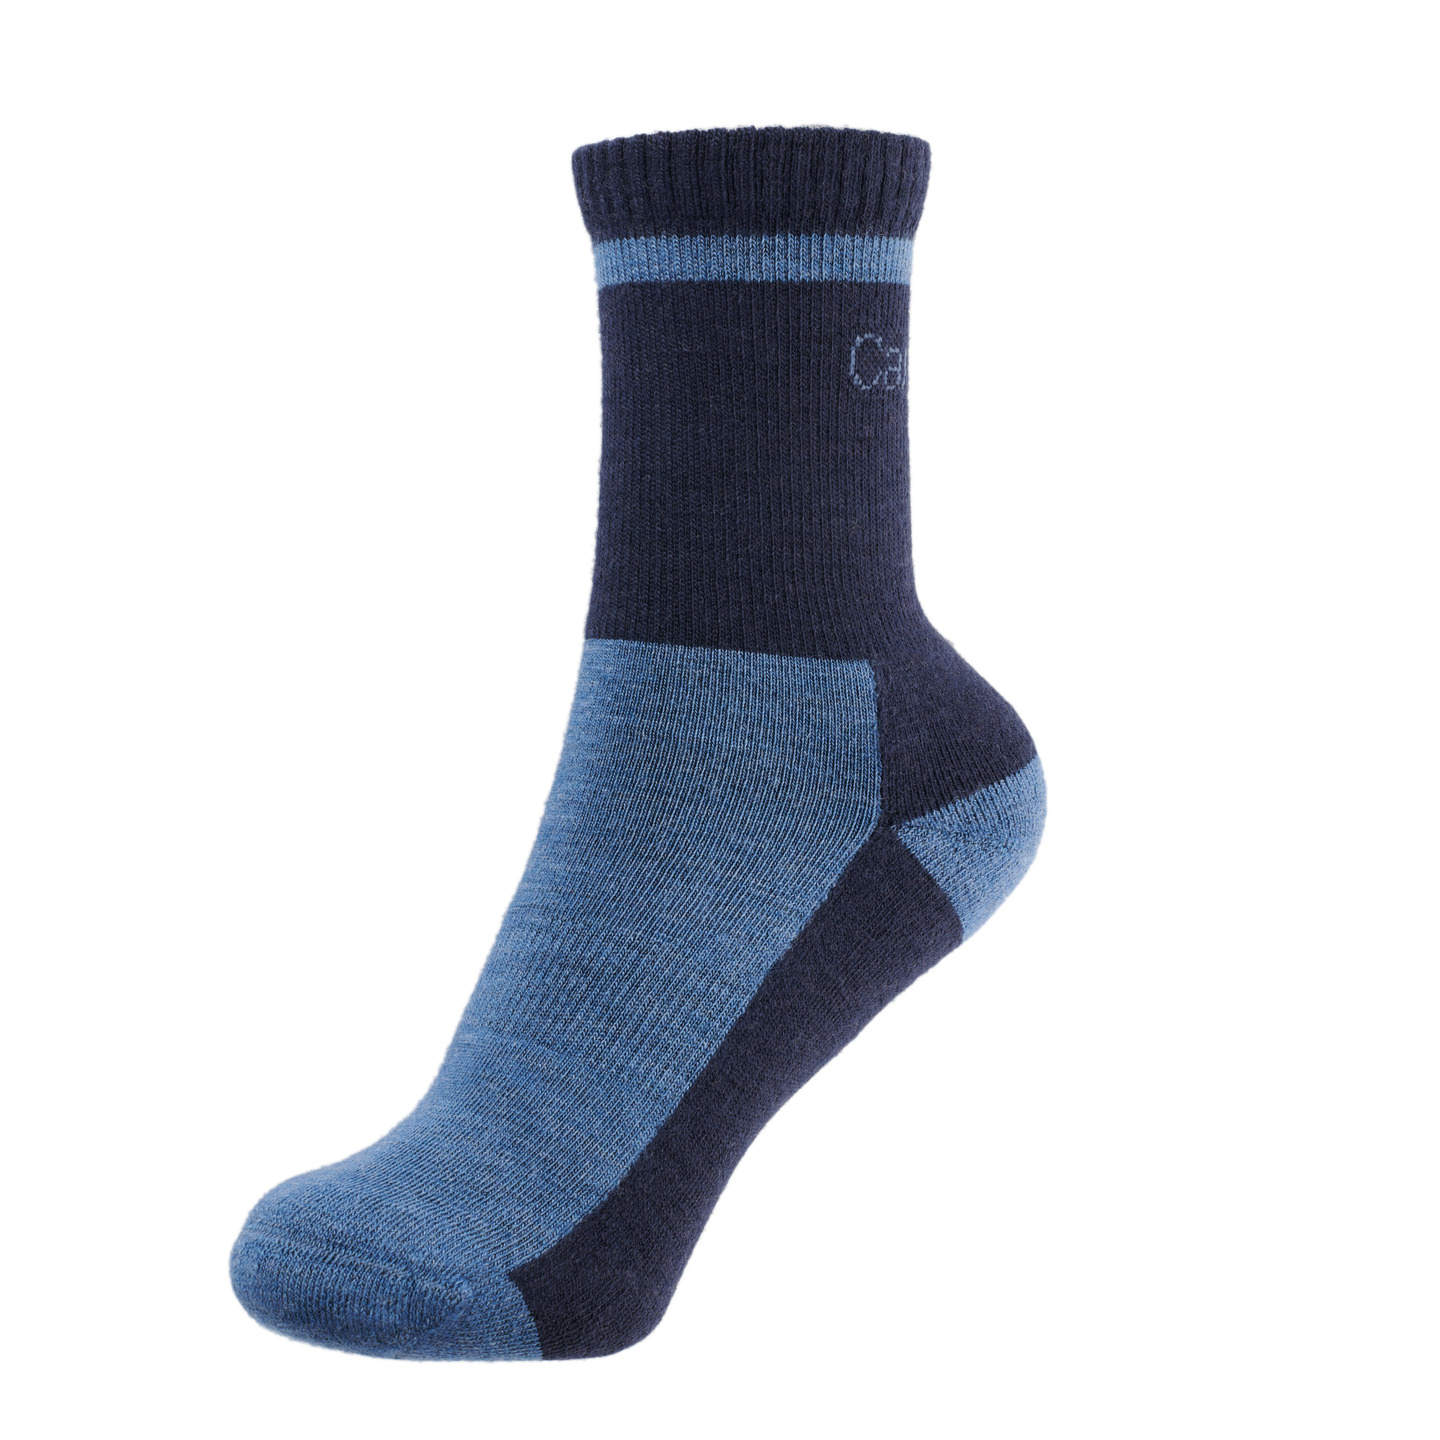 The Wicken Merino, Crew Length Socks, 2 Pair Bundle